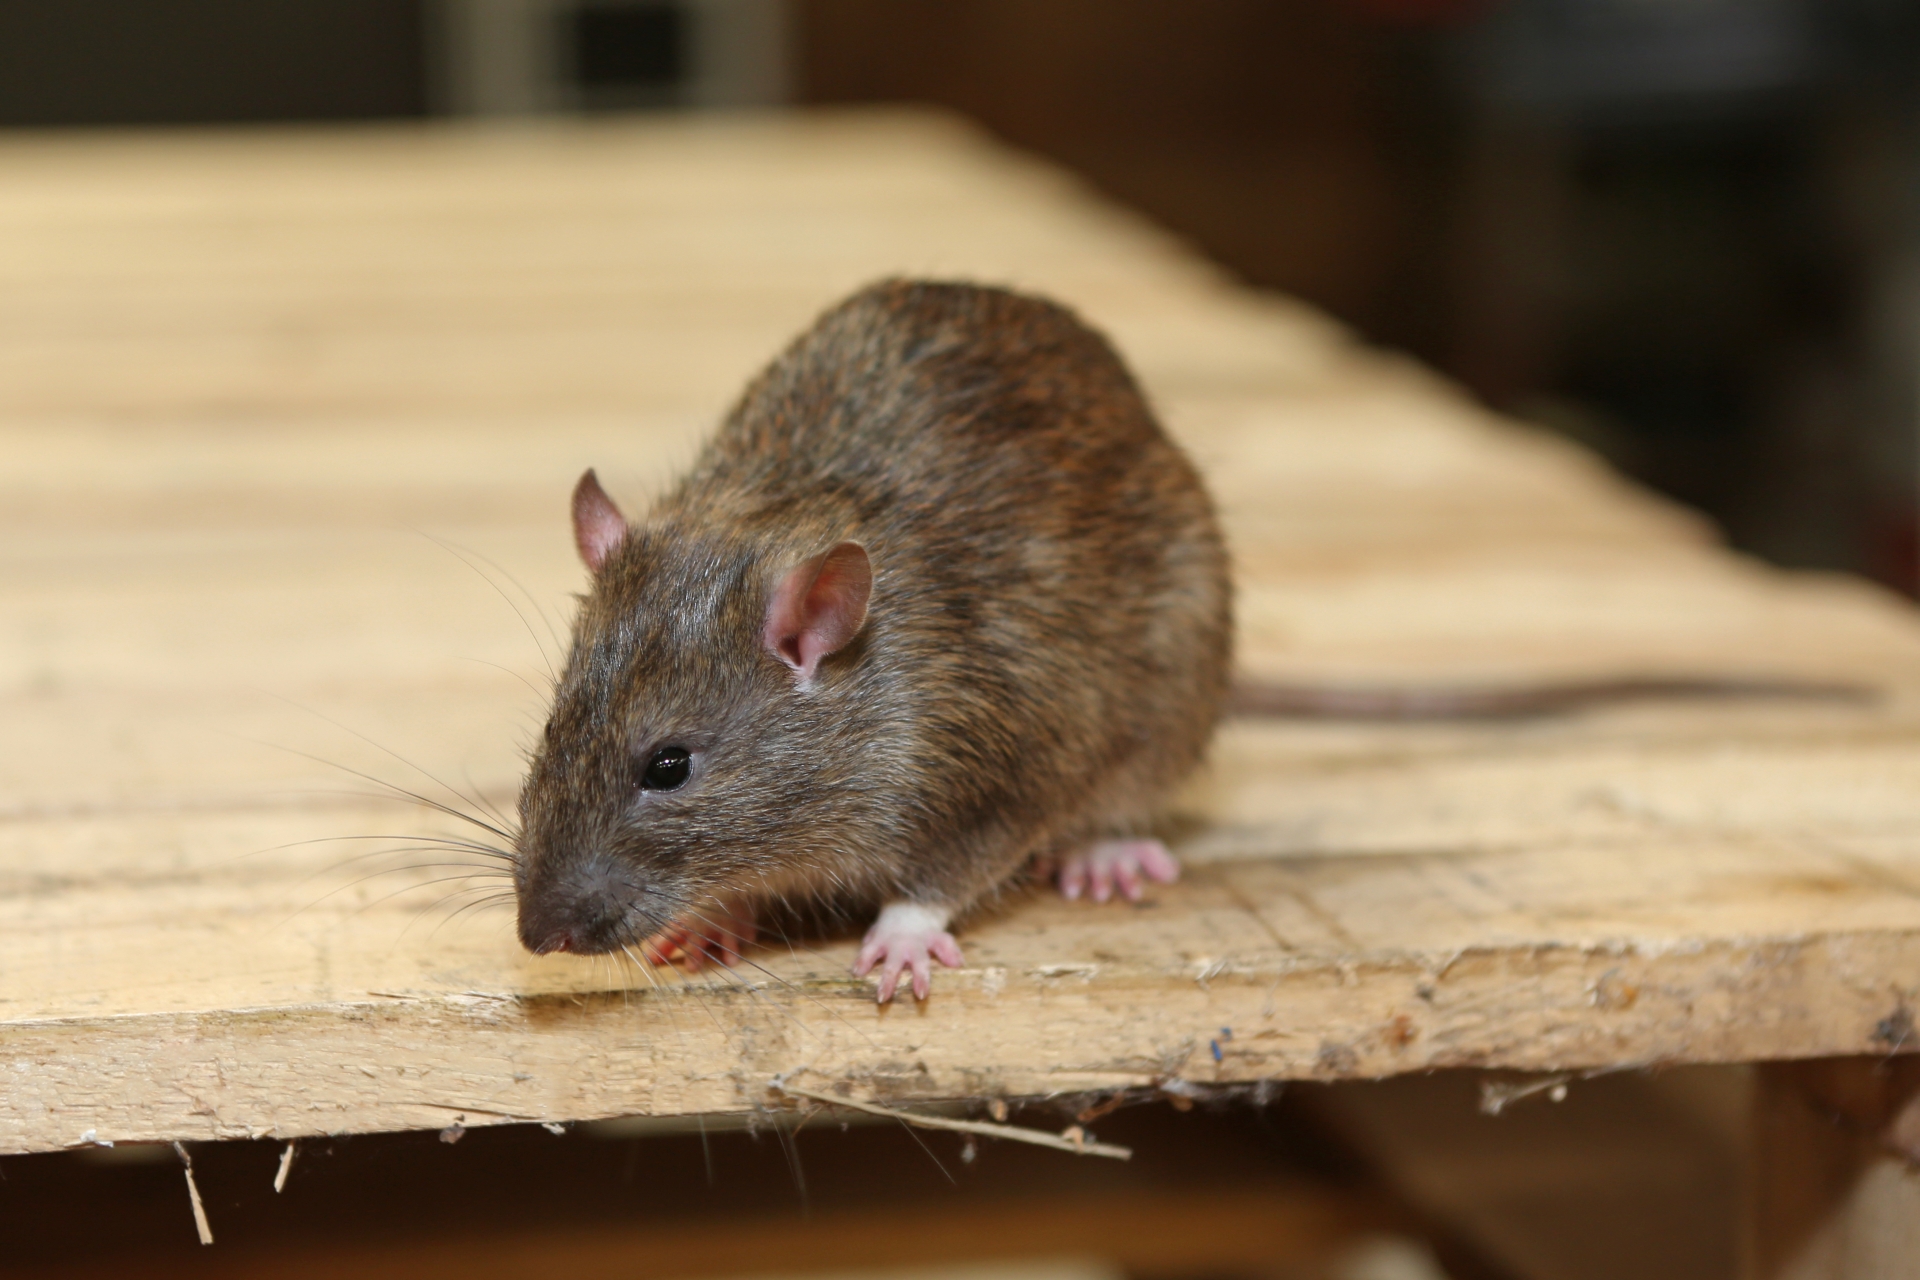 Rat extermination, Pest Control in Croydon, Addiscombe, Selhurst, CR0. Call Now 020 8166 9746